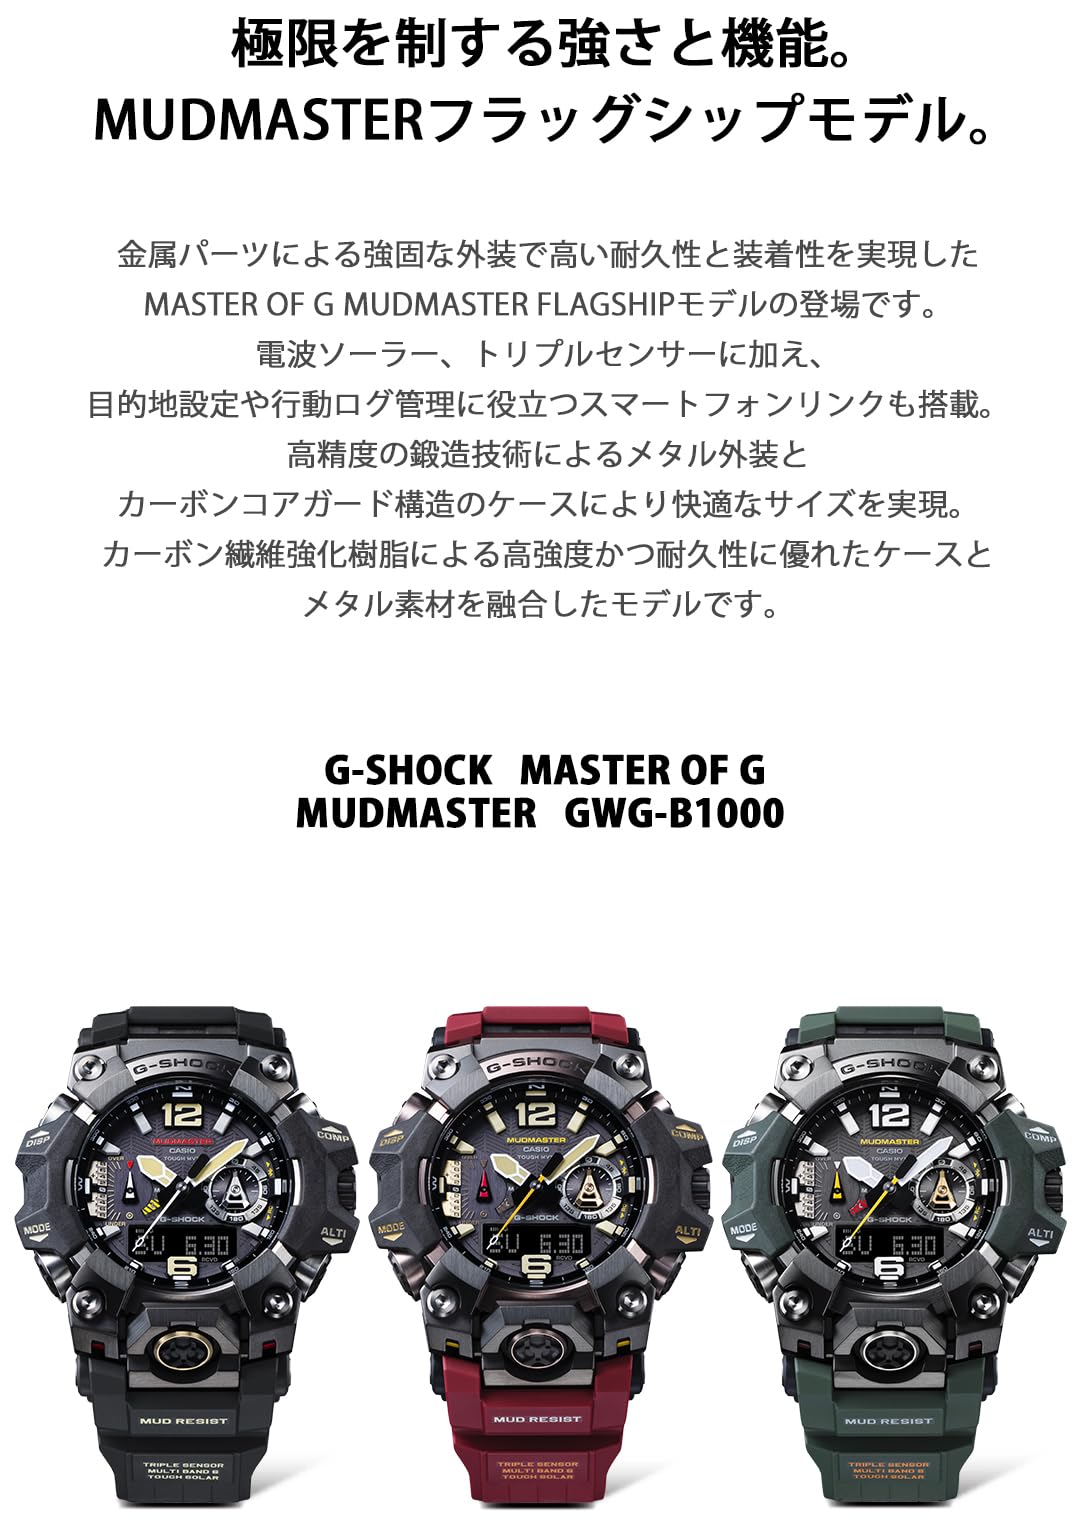 Casio G-Shock GWG-B1000-1A4JF Master of G Series MUDMASTER Flagship Model Triple Sensor Japan Import New